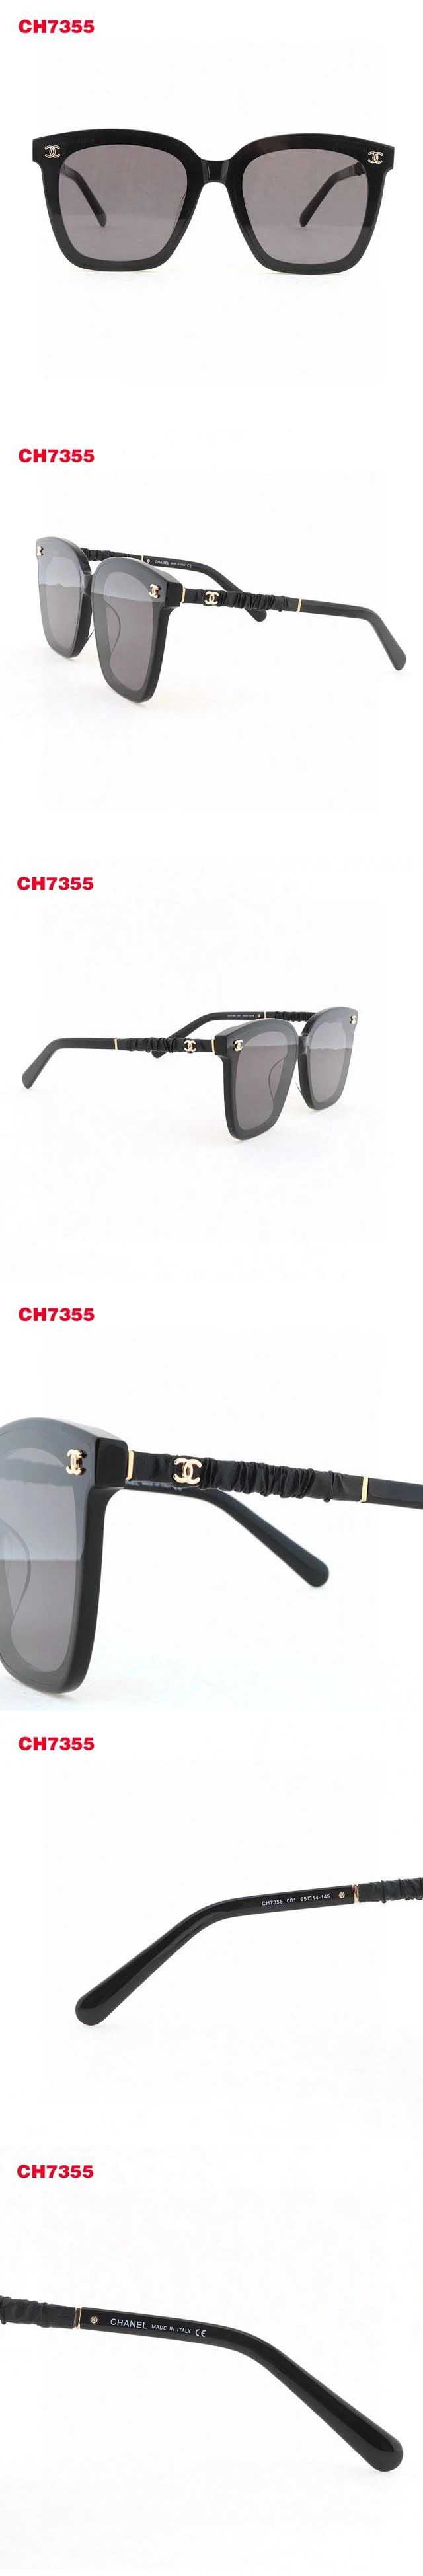 Chanel Black Sunglasses シャネル ブラック サングラス